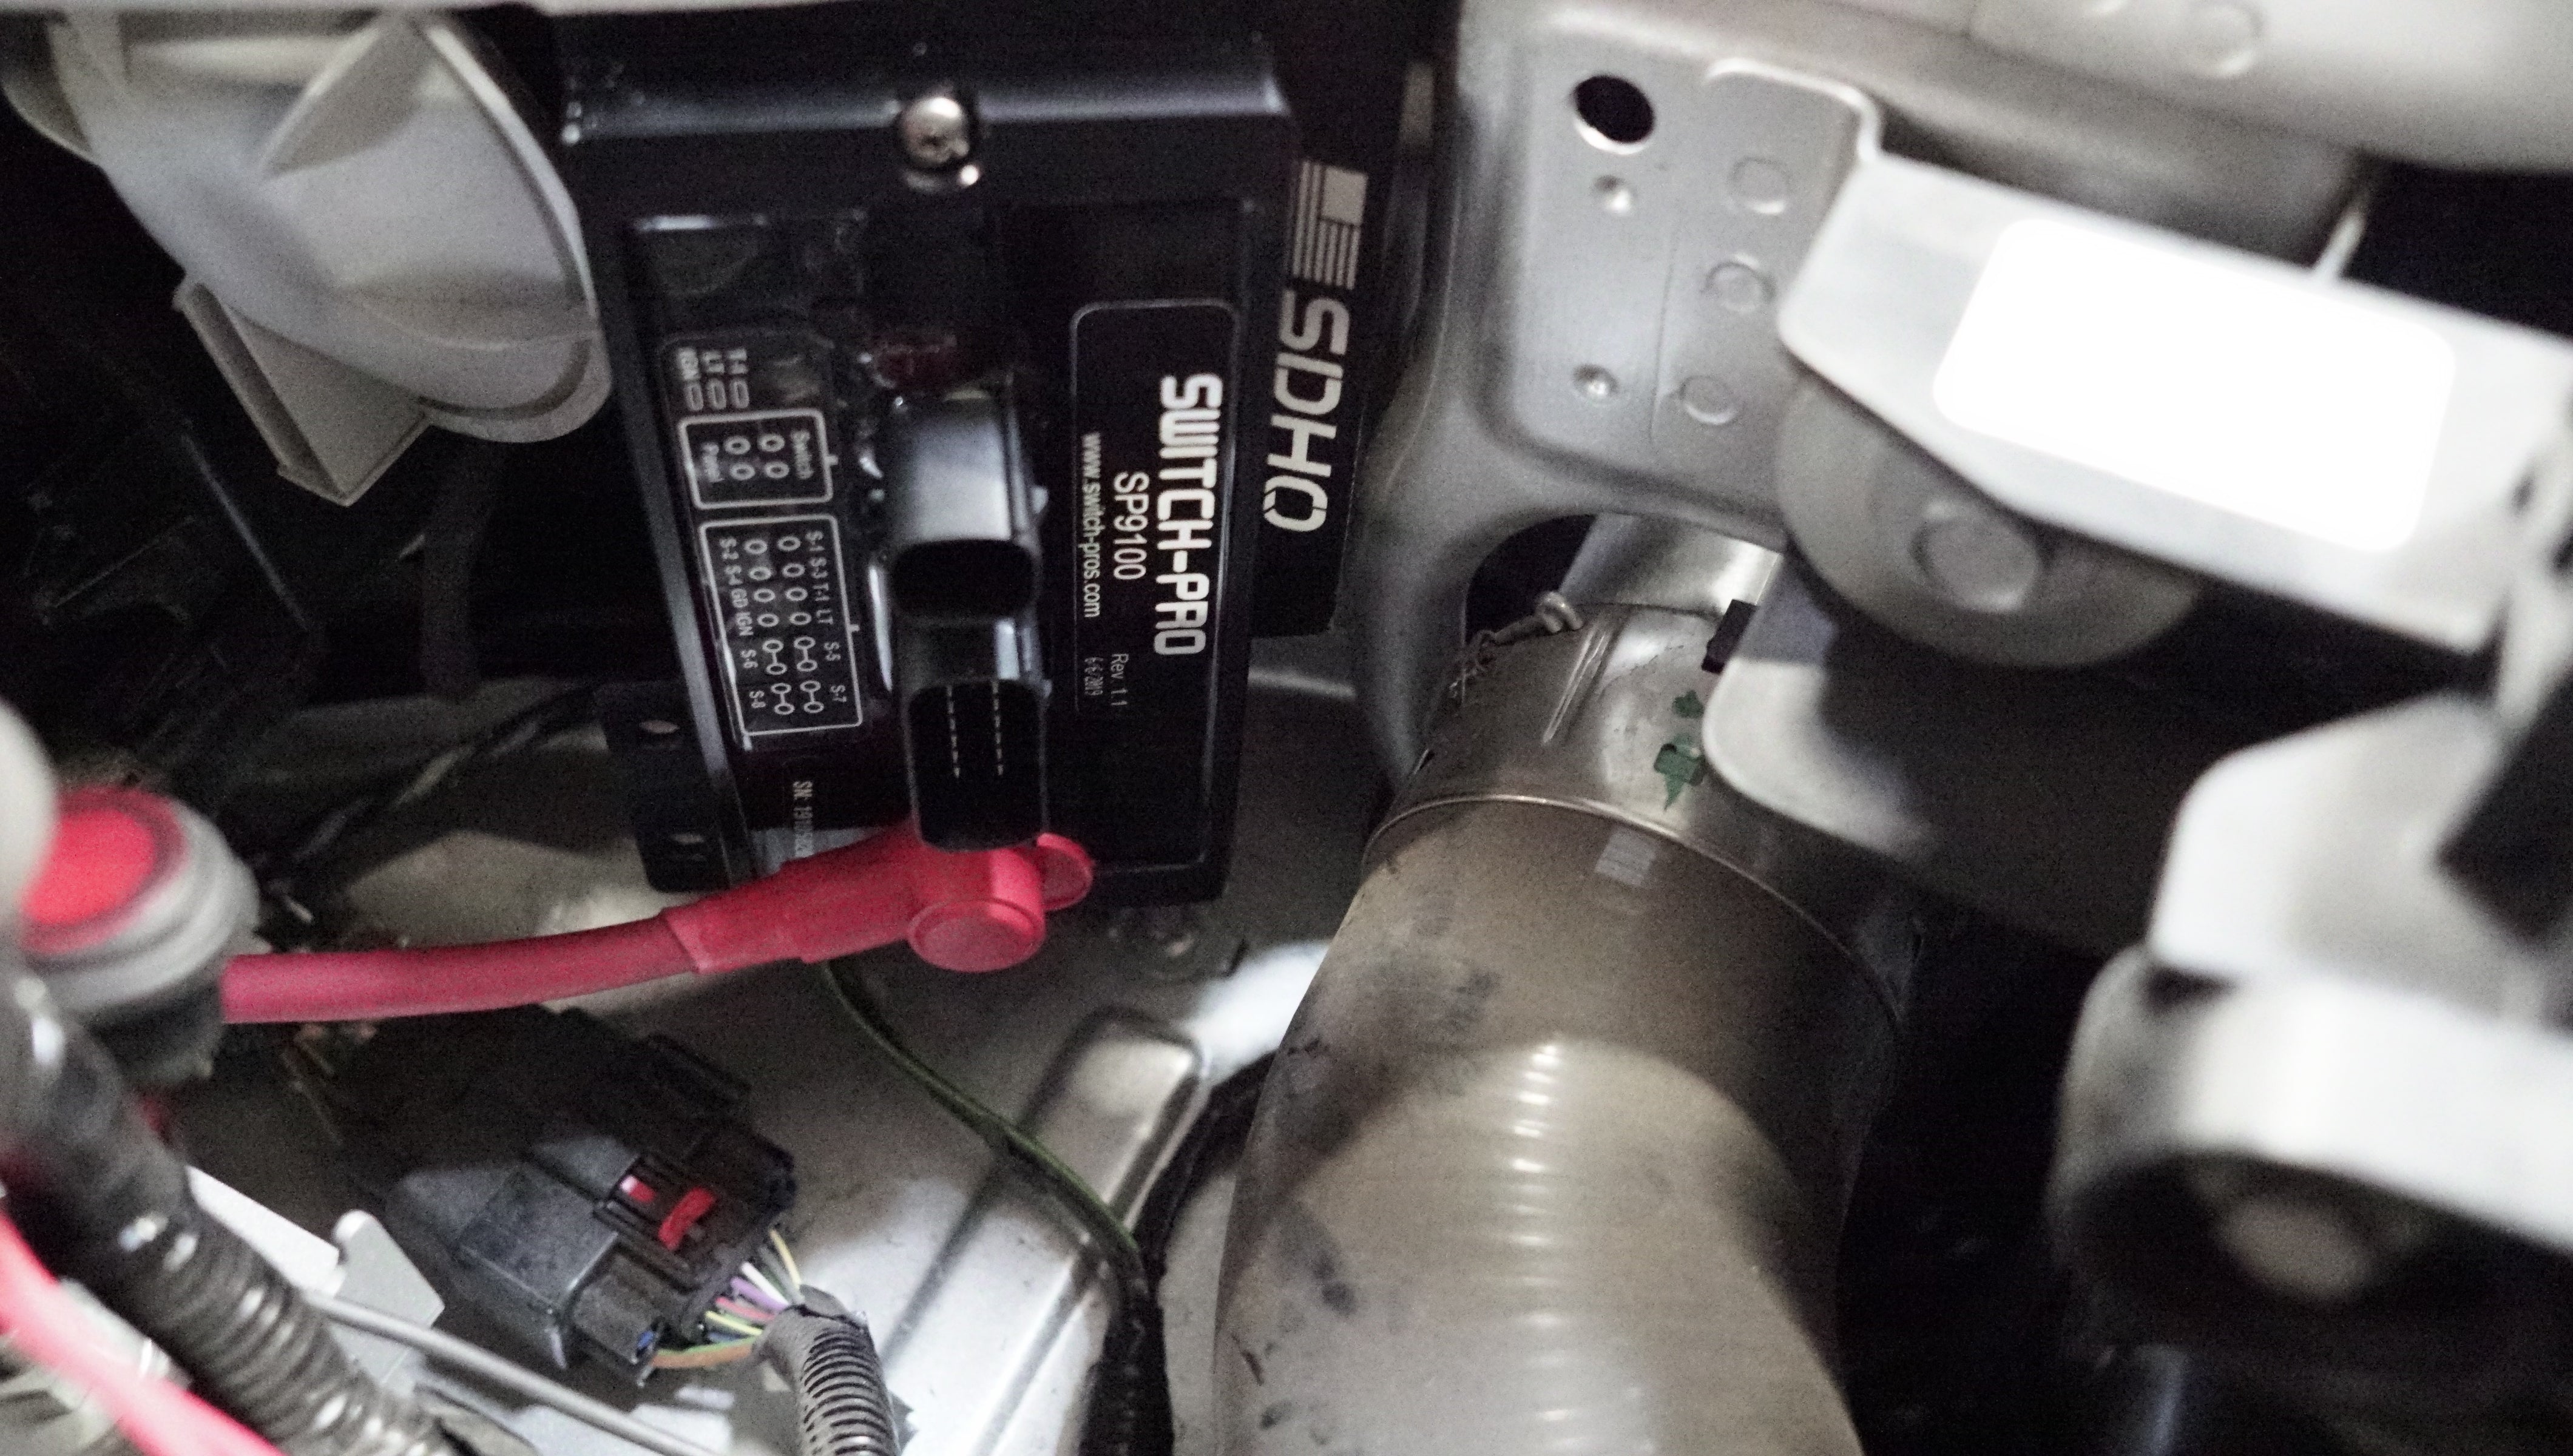 '19-23 Ford Ranger SDHQ Built Switch Pros Power Module Mount display